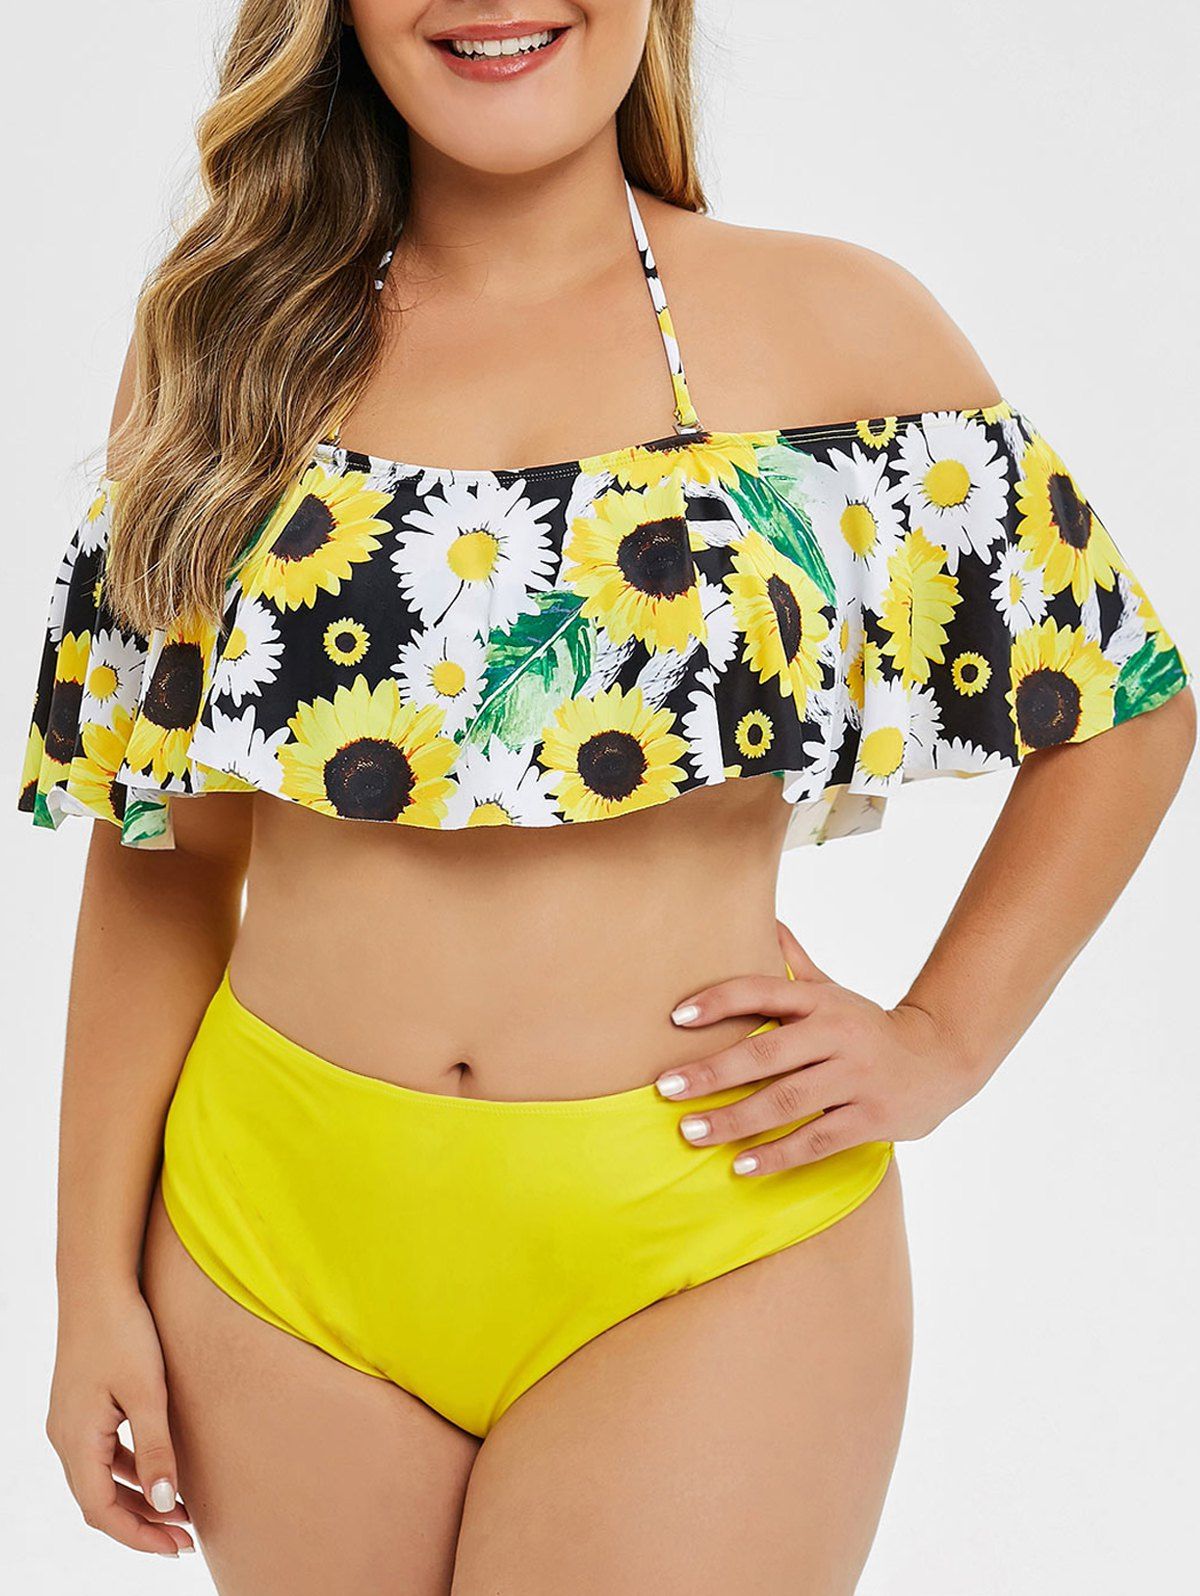 Sunflower Contrast Overlay Flounces Plus Size Bikini Set - YELLOW 1X